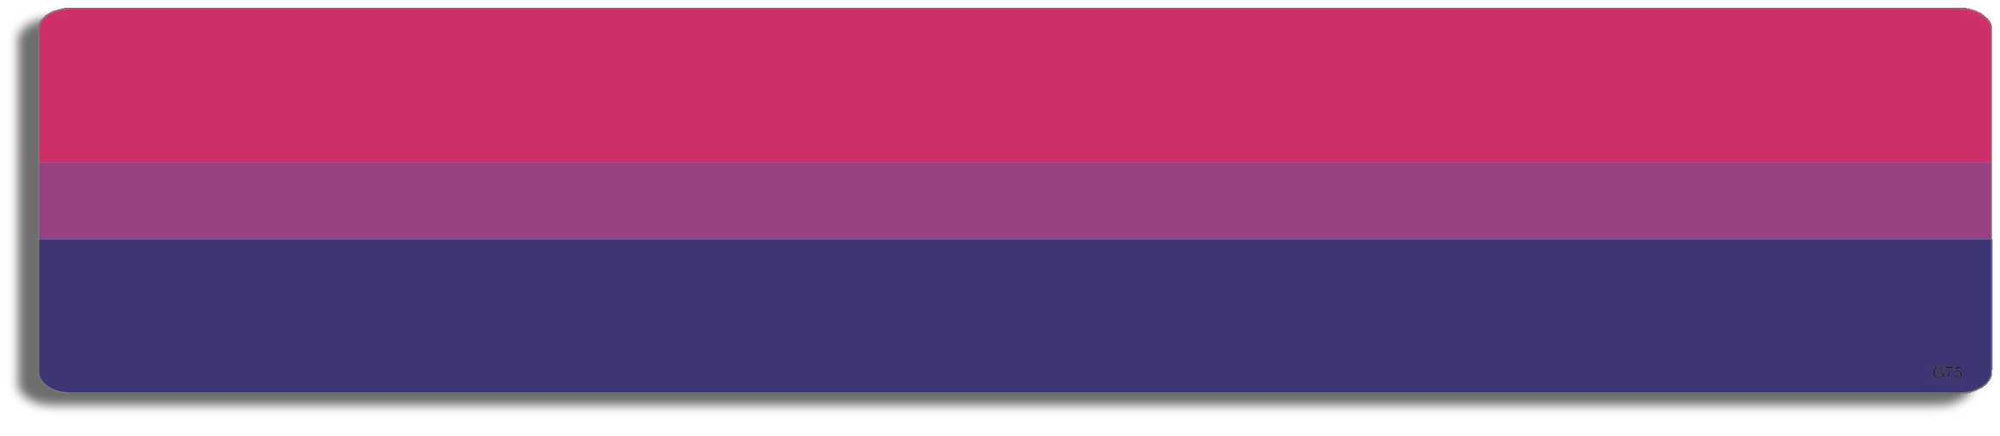 Bi-sexual Skinny Flag - 2" x 10" -  Decal Bumper Sticker-LGBT Bumper Sticker Car Magnet Bi-sexual Skinny Flag-  Decal for carsbisexual, gay, lgbtq, pride, trans, transgender